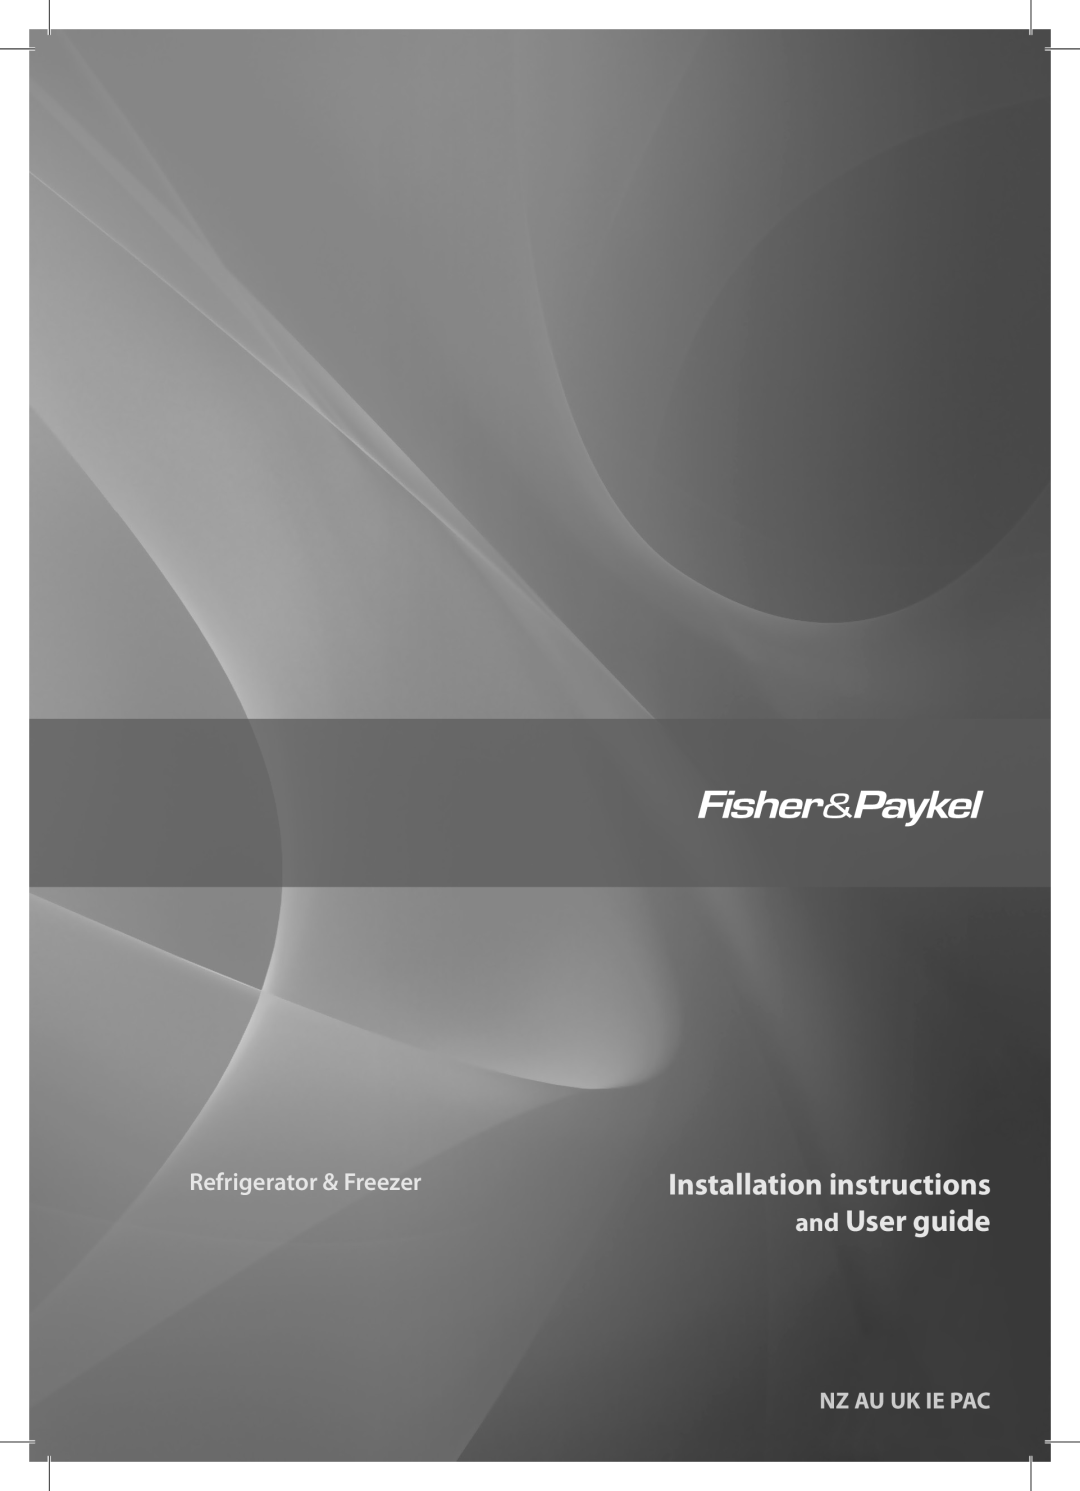 Fisher & Paykel E402B, E442B installation instructions Installation instructions and user guide, Ice & Water refrigerator 